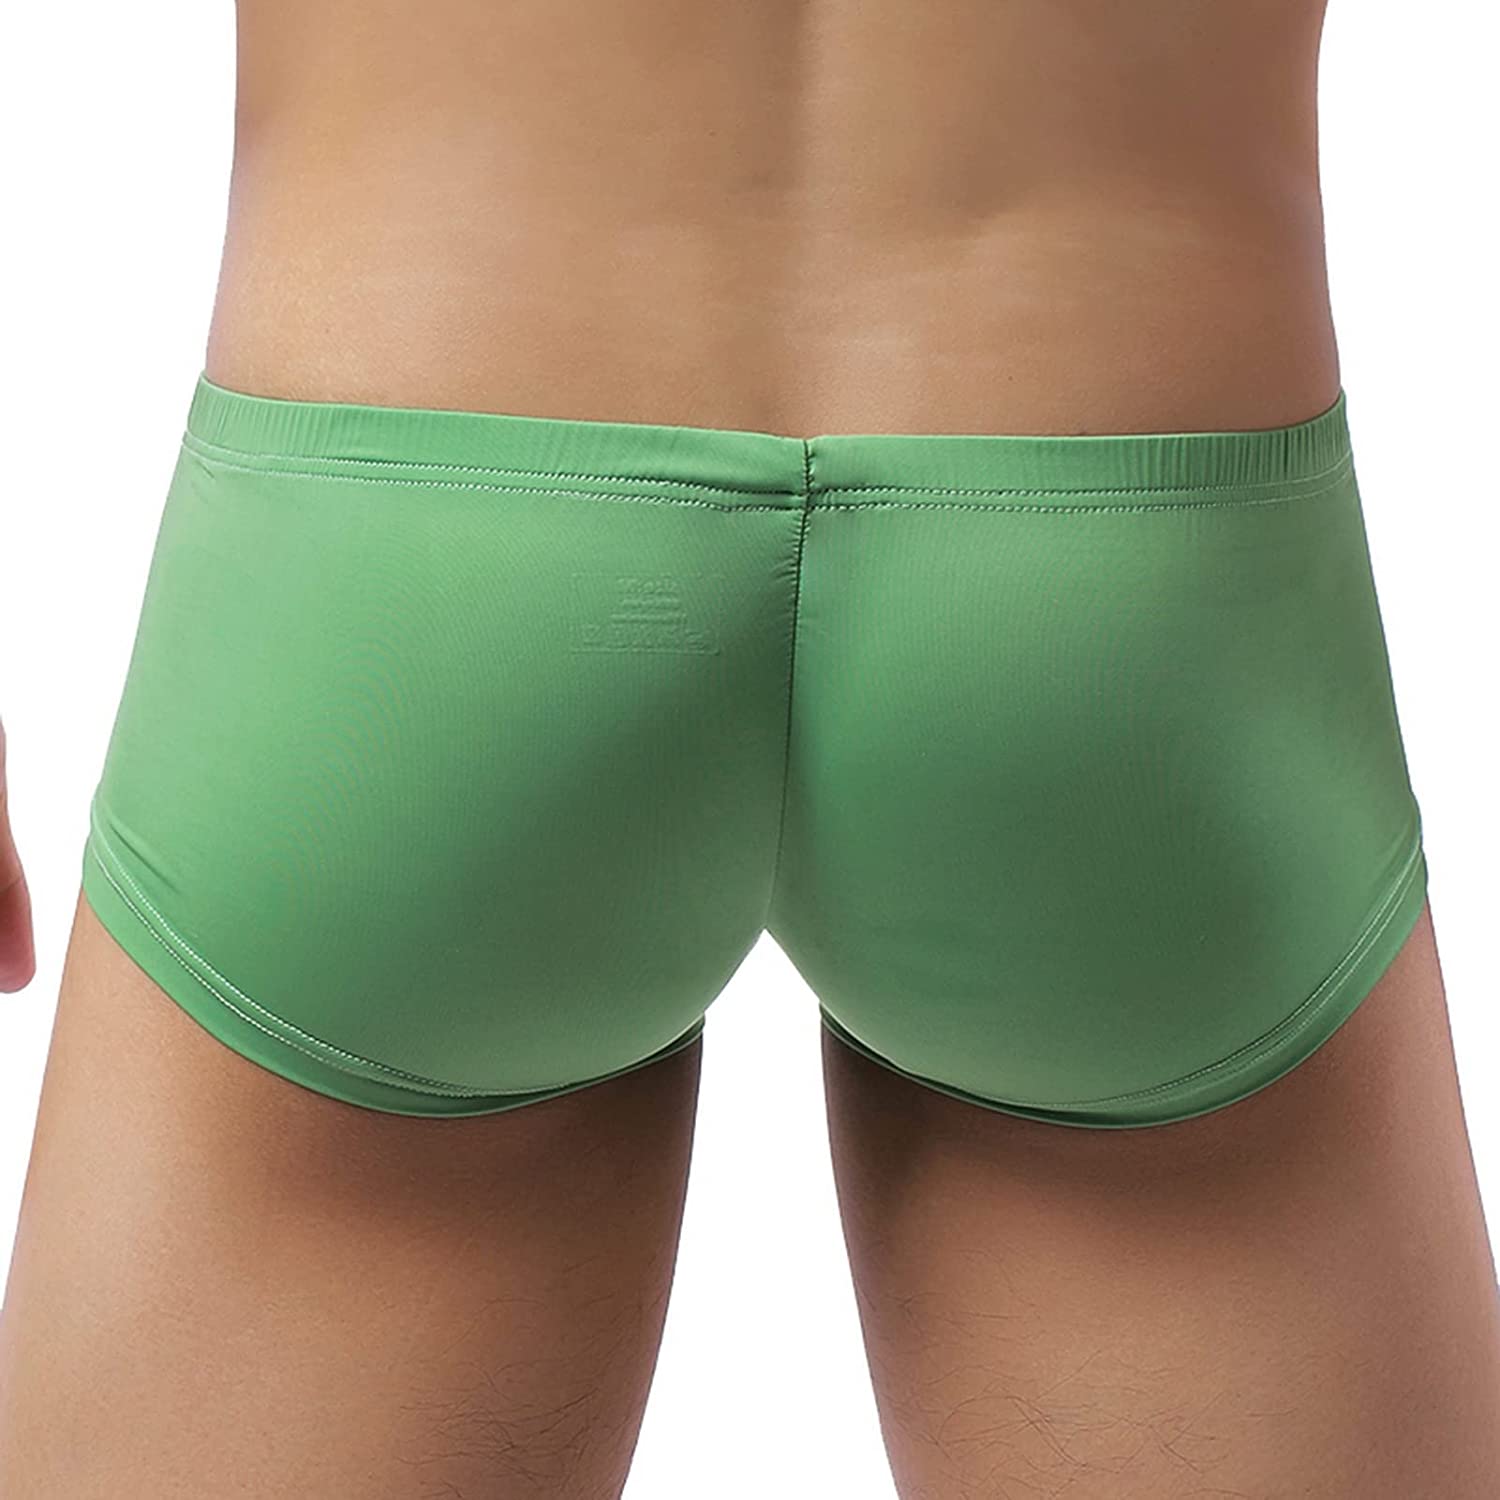 JINSHI Men's Bulge Enhancing Underwear Briefs Bamboo Breathable